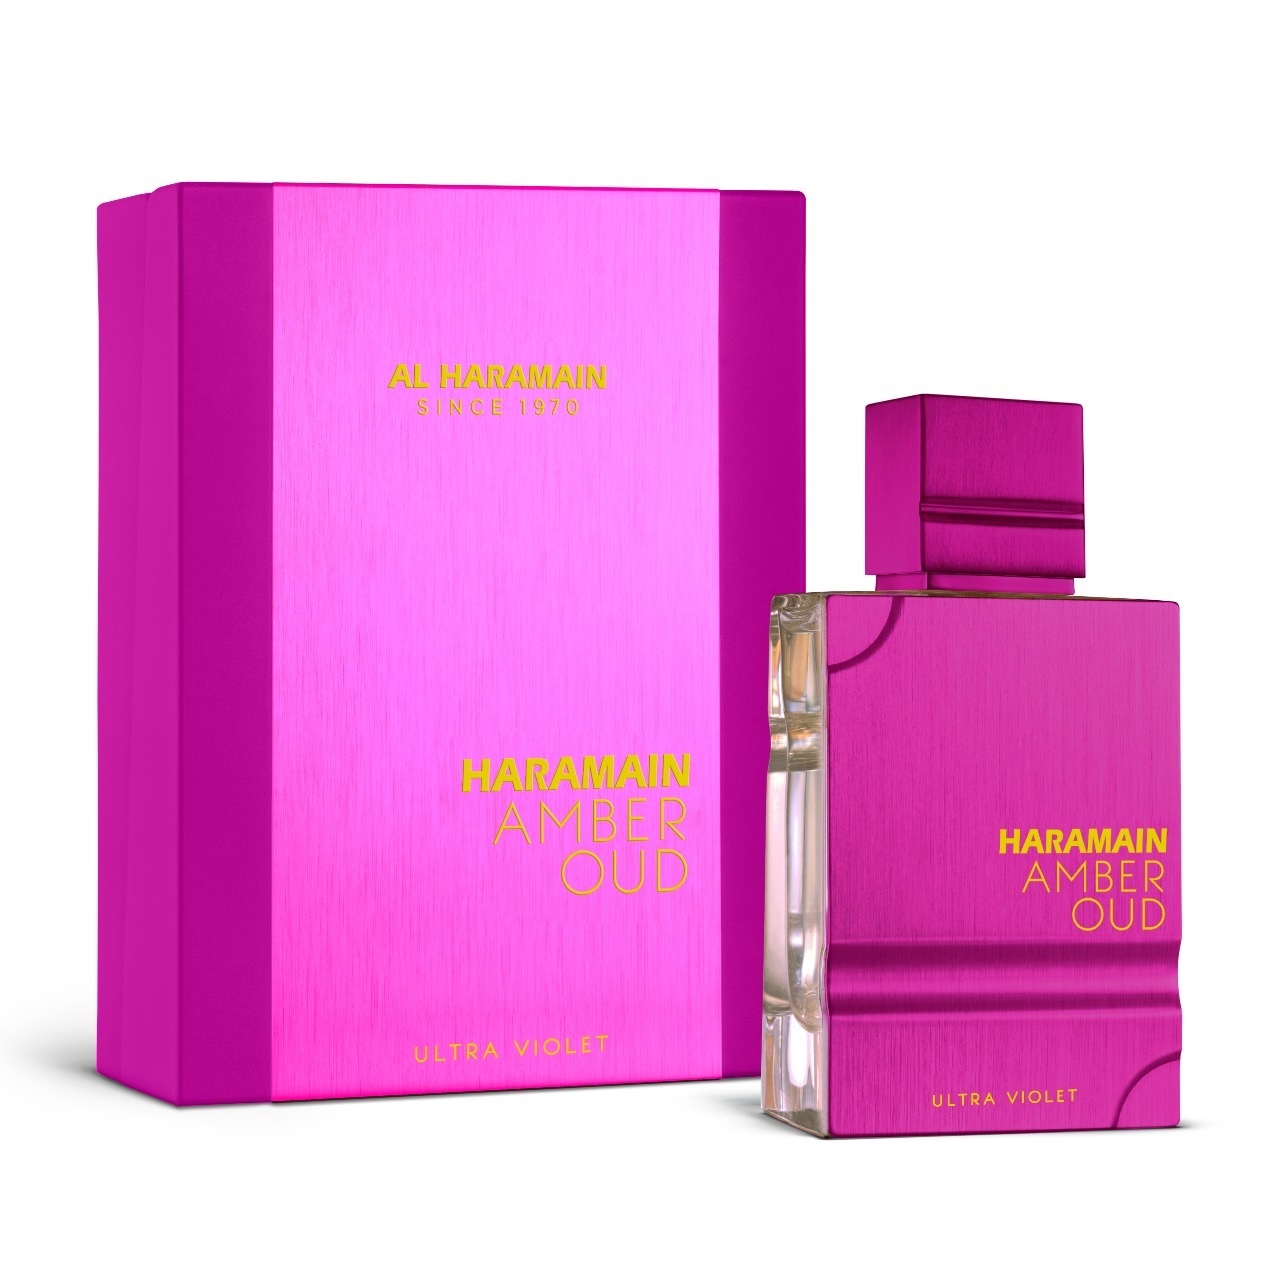 Al Haramain Ladies Amber Oud Ultra Violet Edp Body Spray 4.0 oz Fragrances 6291100133475 In Amber / Violet / White